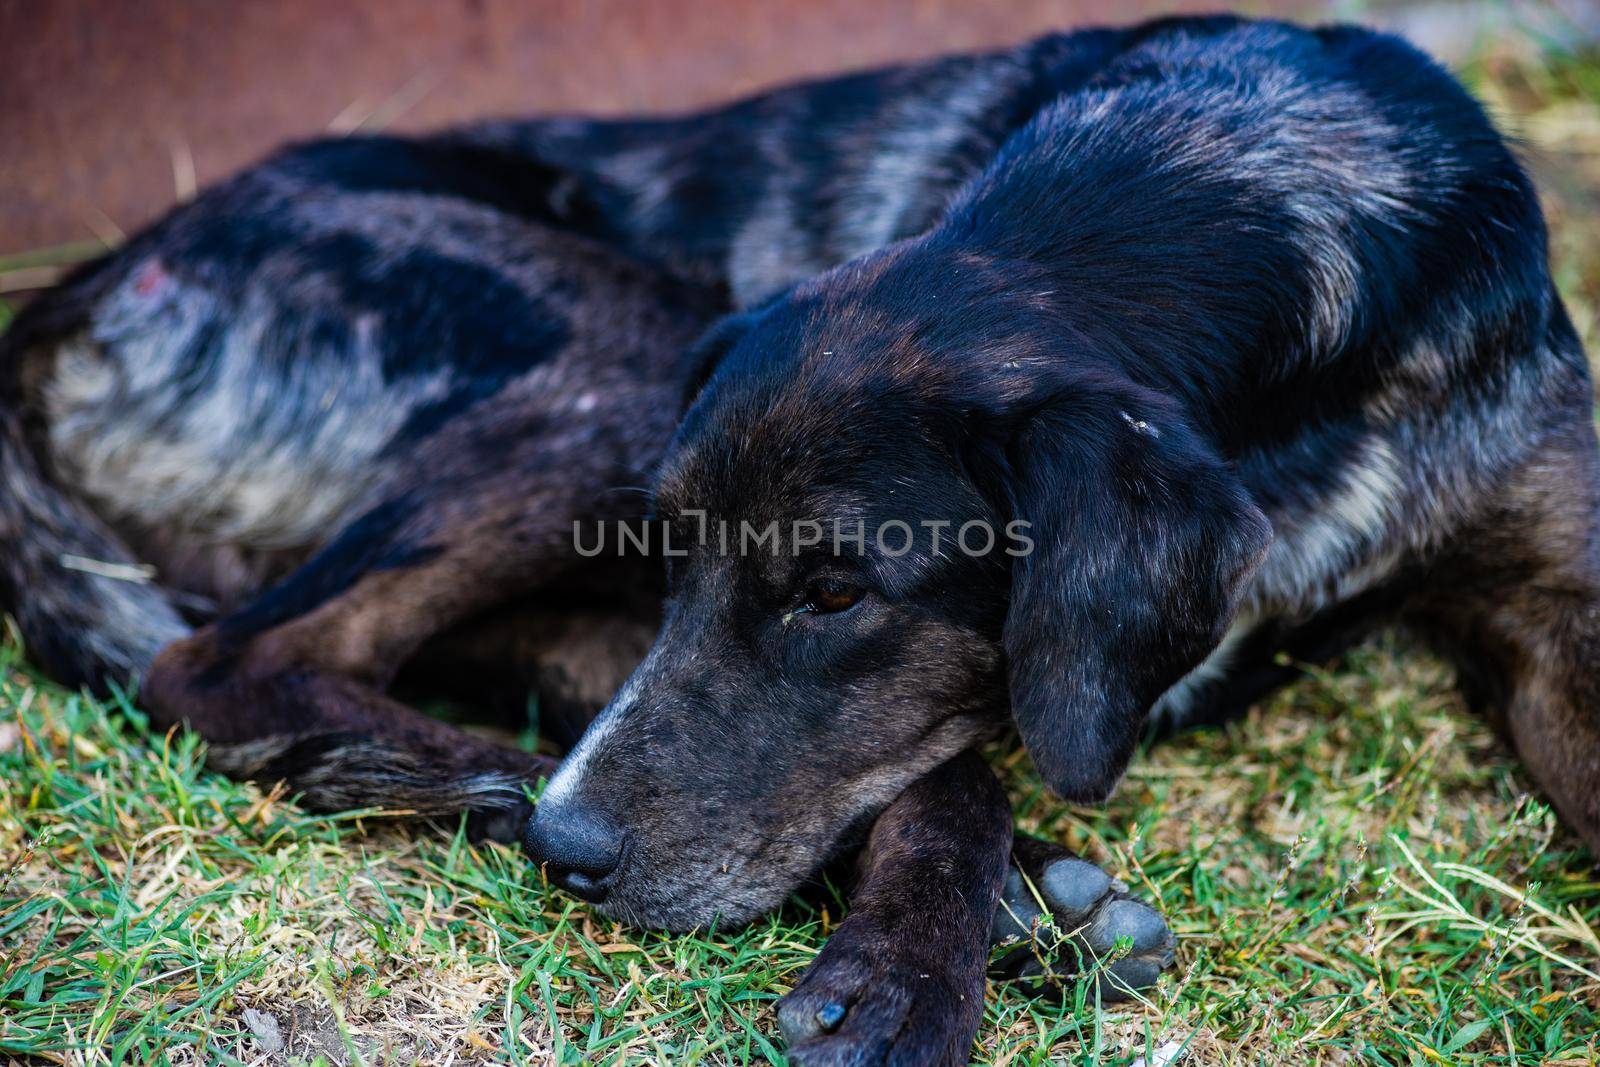 Sad eyes of homeless dog by Elet